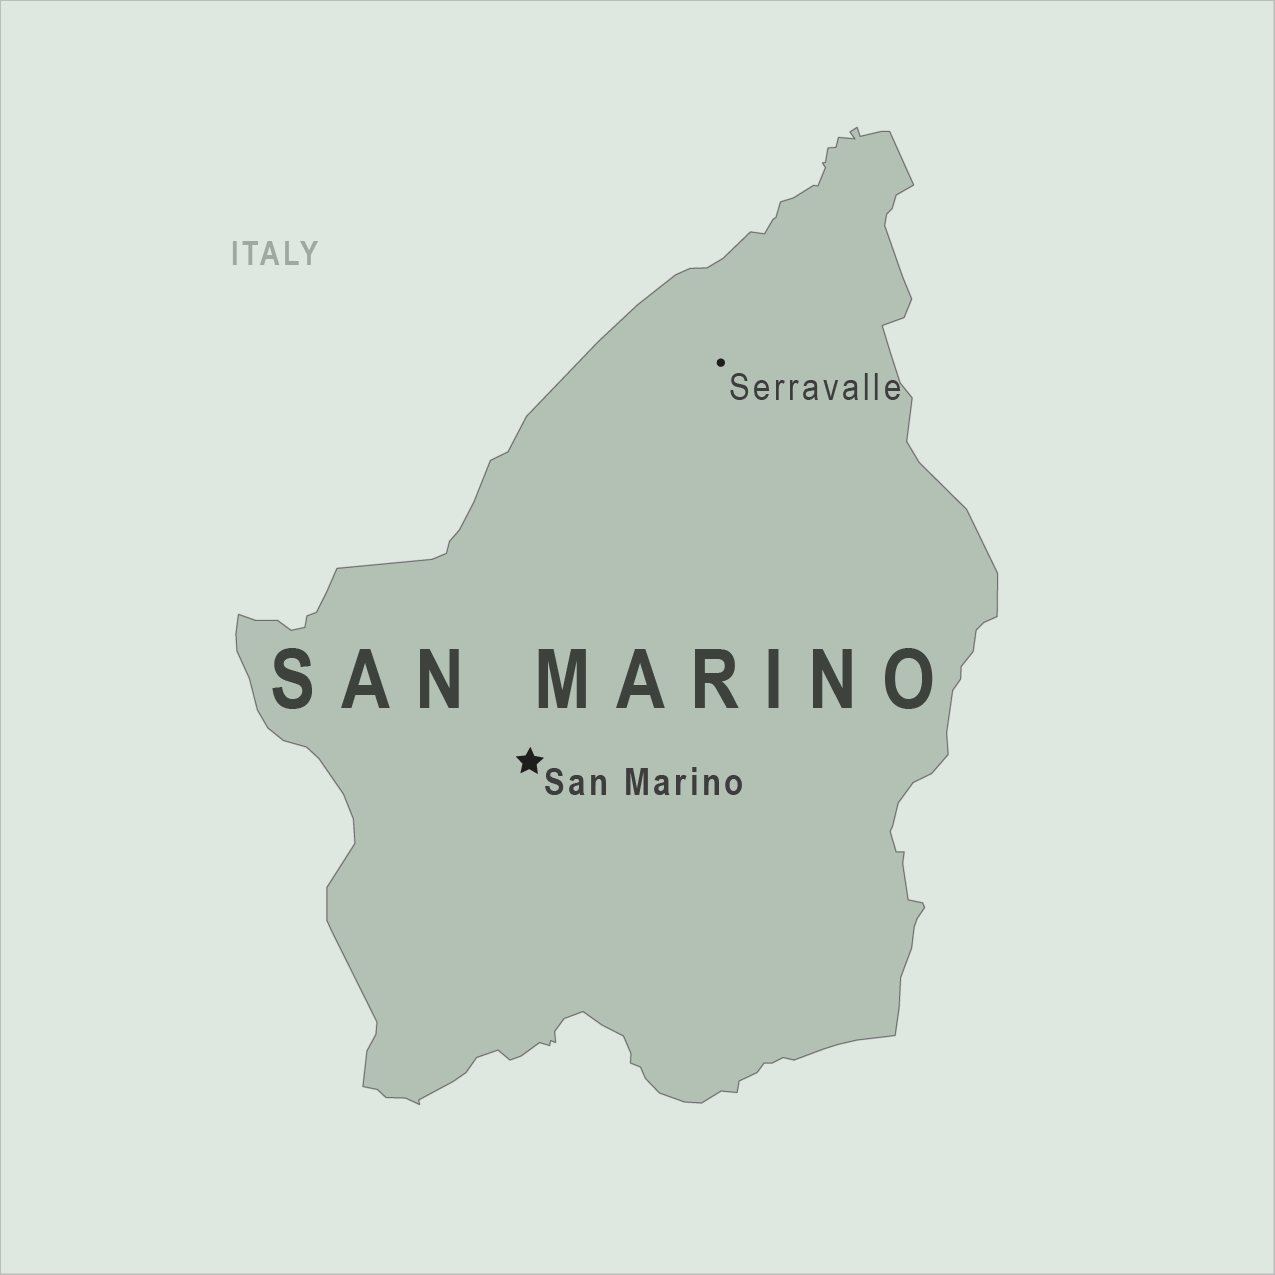 Map - San Marino